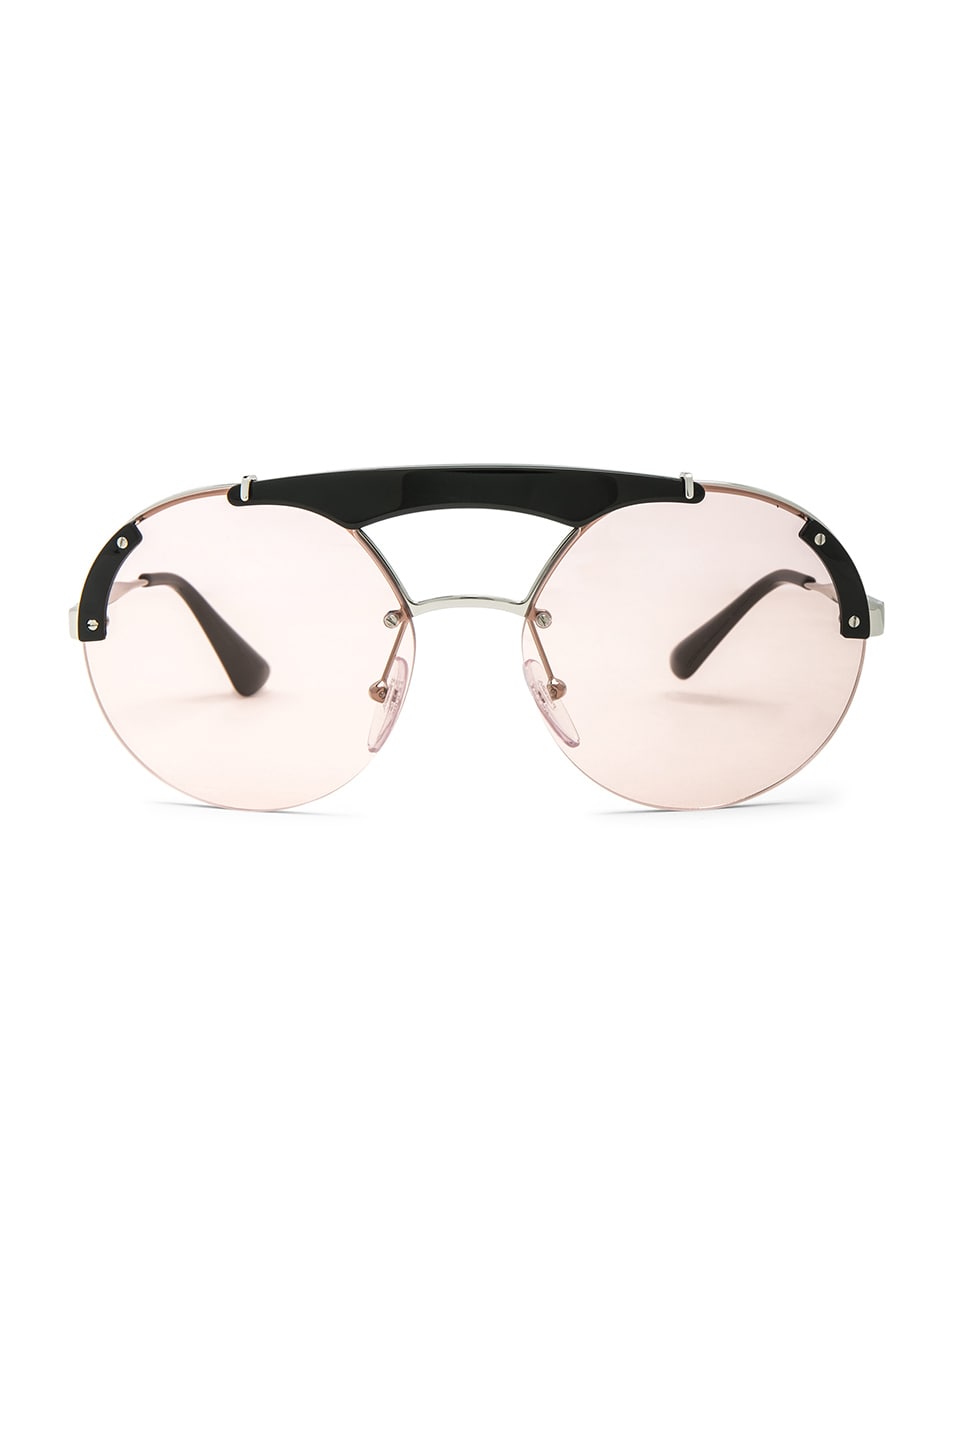 Image 1 of Prada Round Ornate Sunglasses in Silver, Black & Light Pink